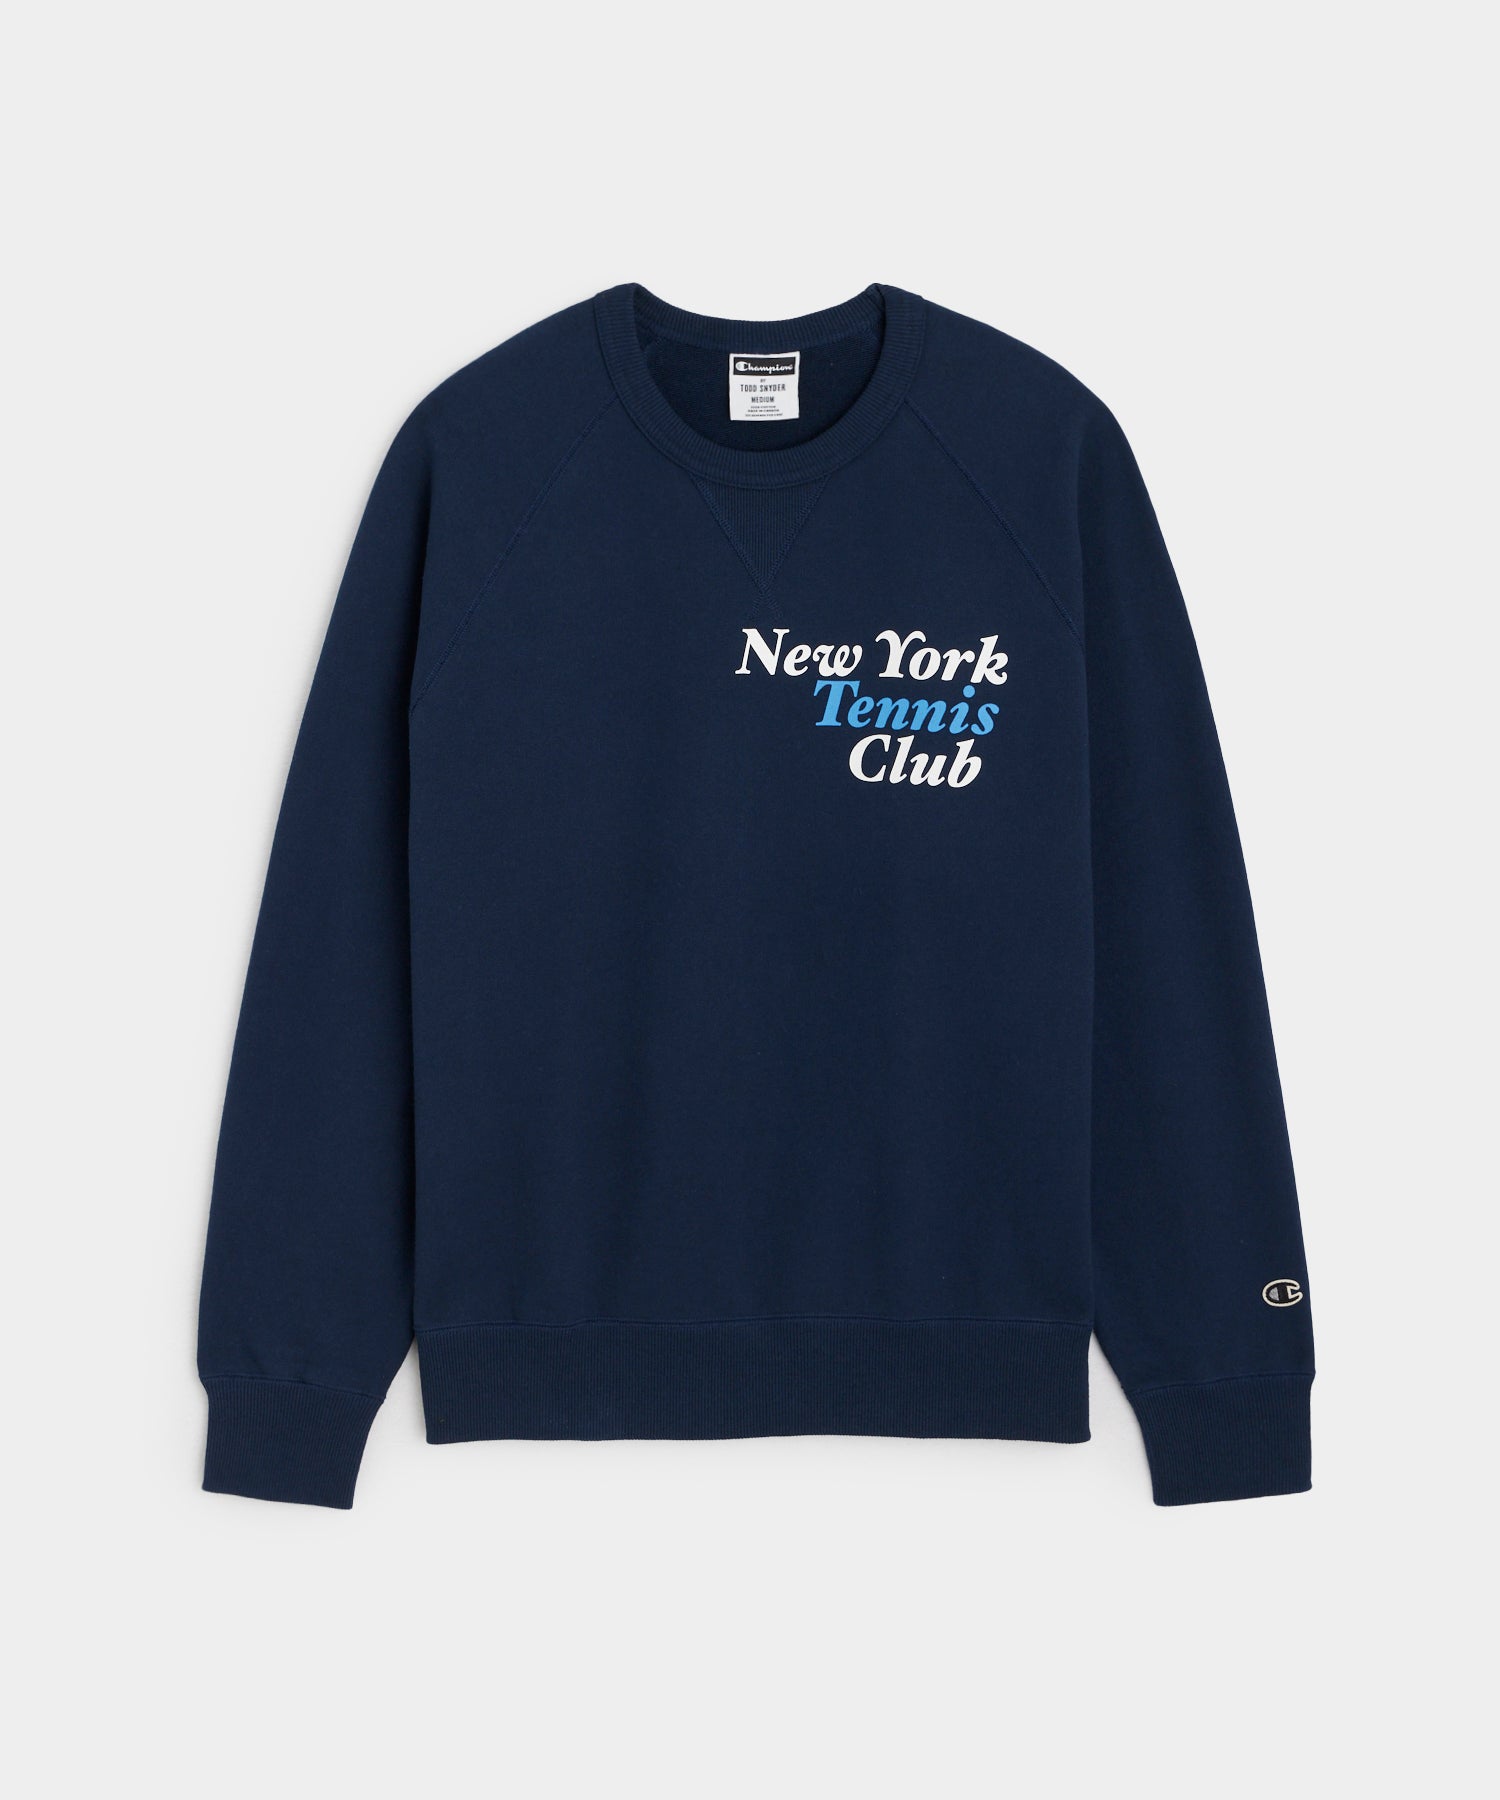 New York Tennis Club Crewneck Sweatshirt in Classic Navy